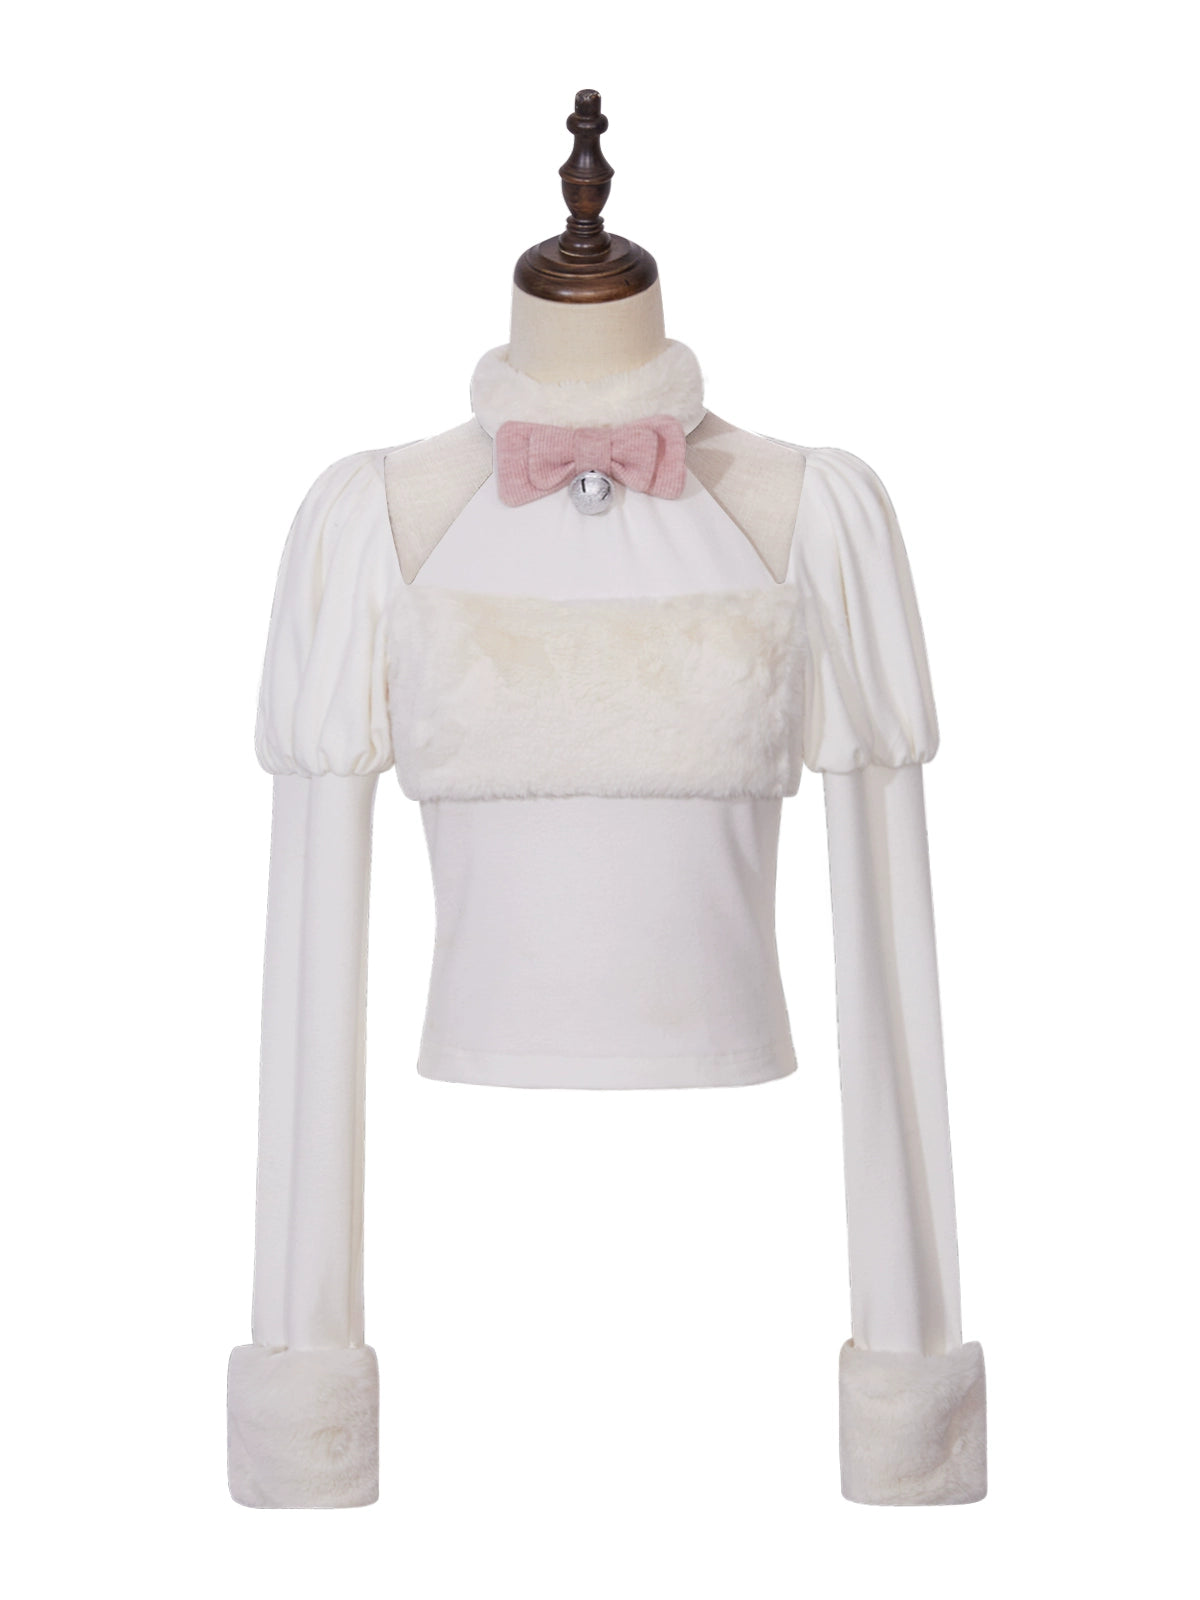 (BFM)Tan Tuan~Wish Cat~Sweet Lolita Shirt Fur Collar Knitted Blouse white innerwear (off-shoulder style) S 